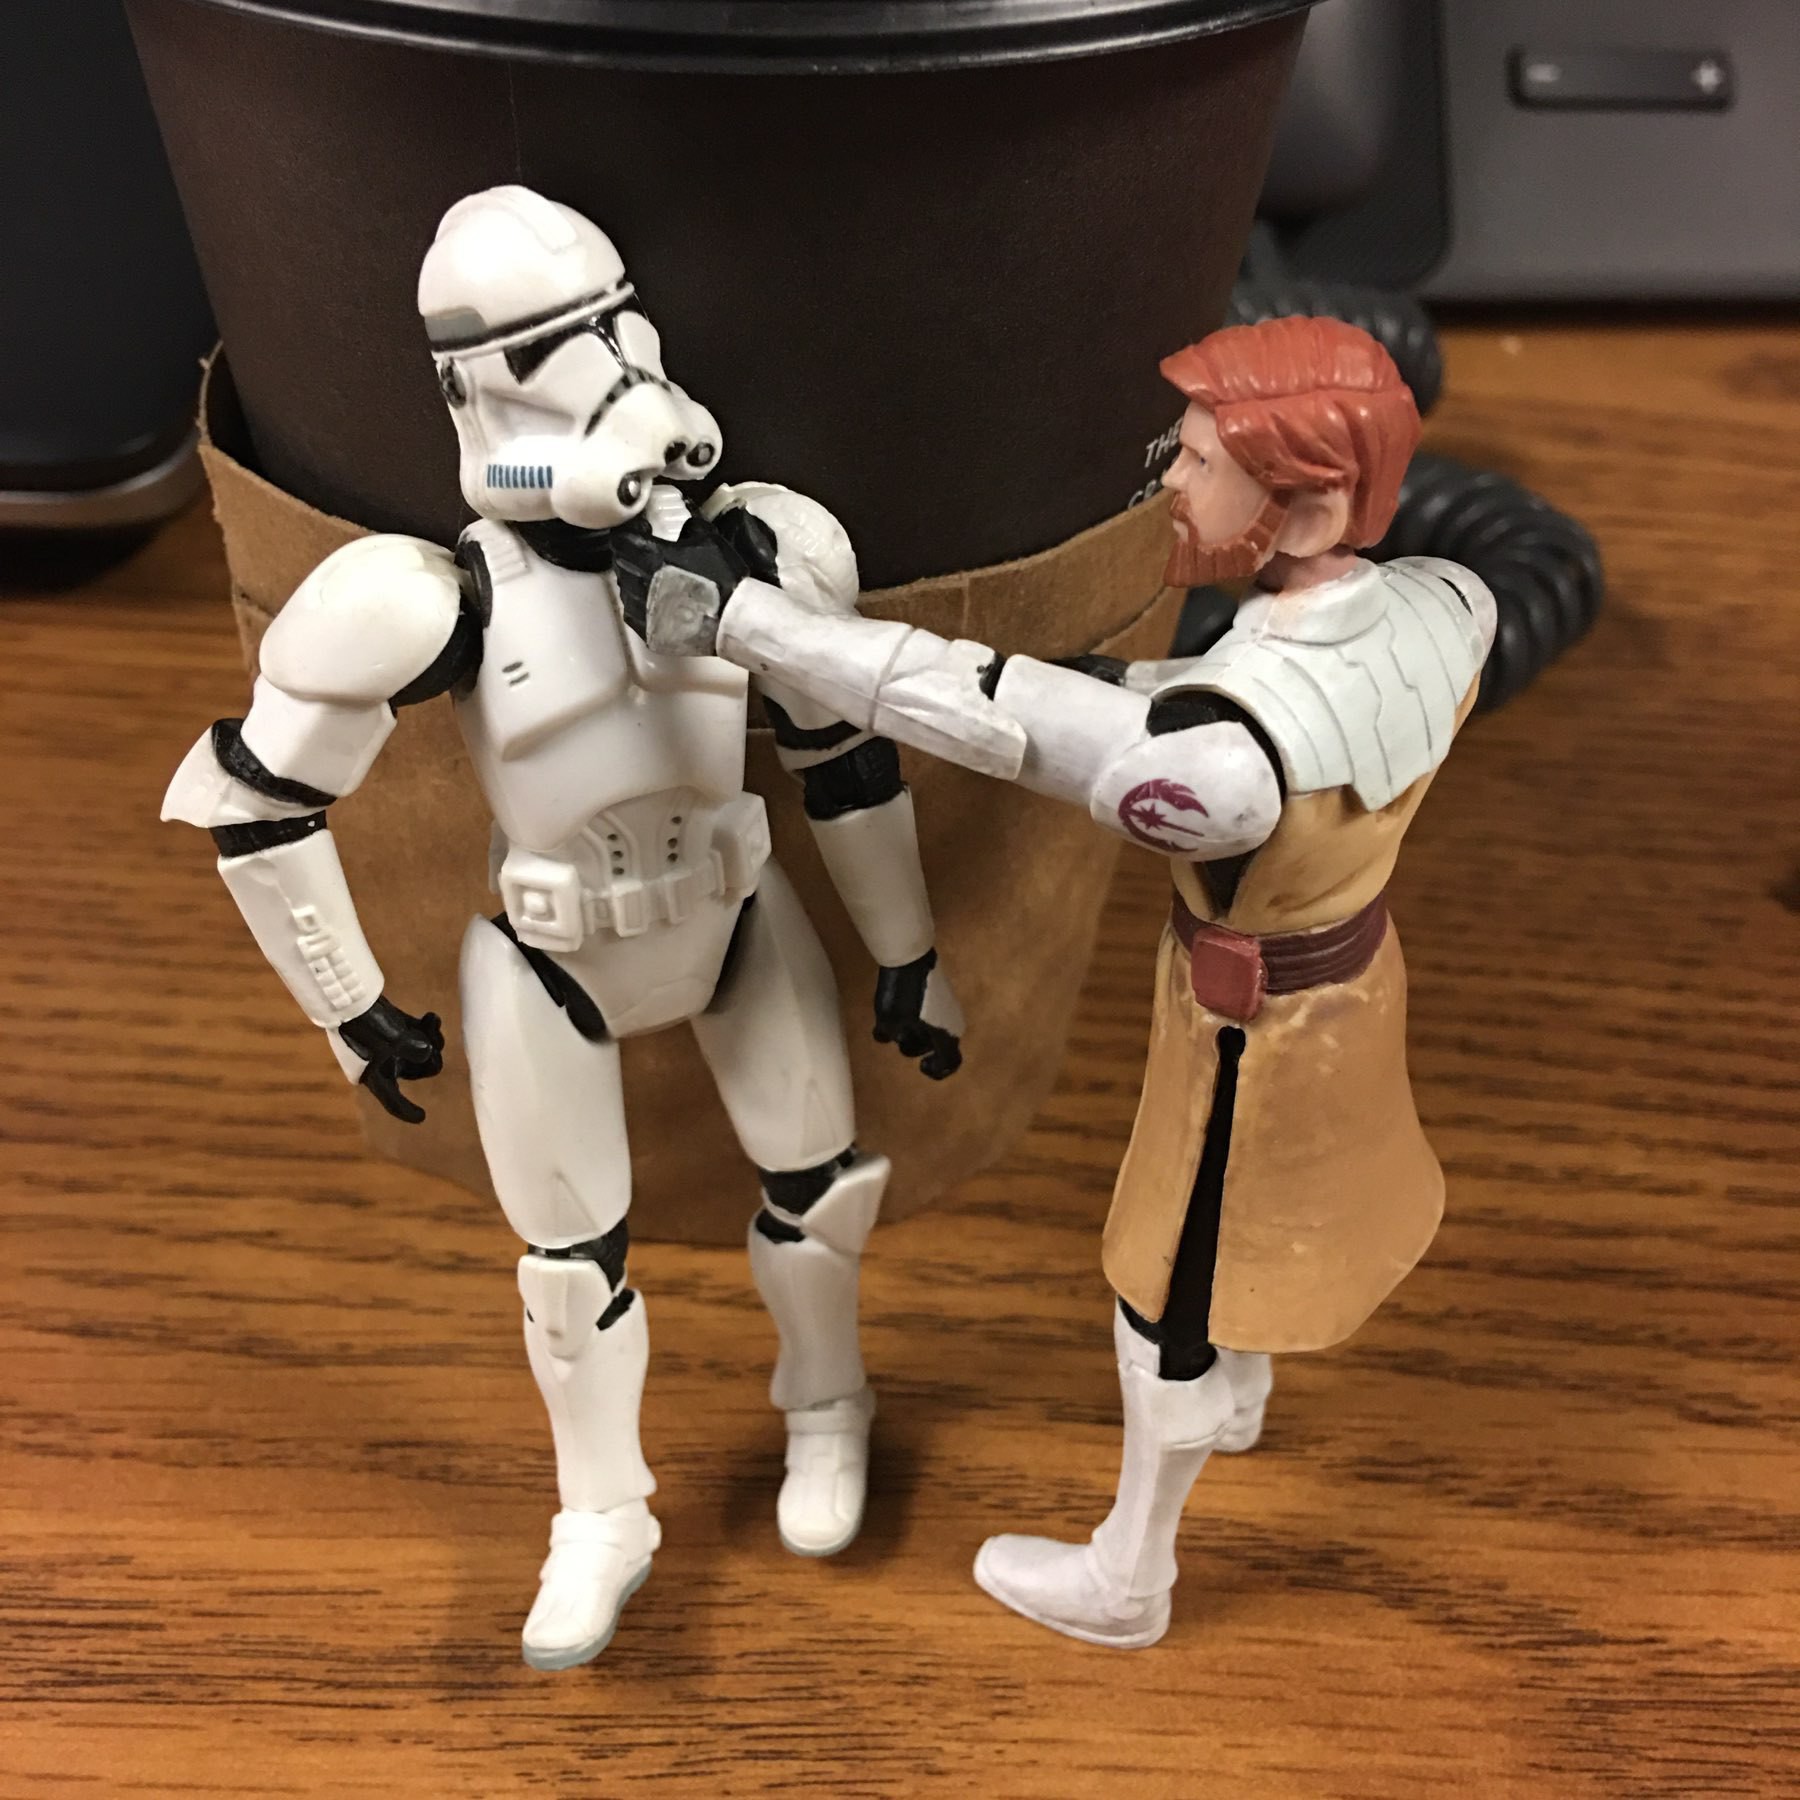 Obi-Wan punching a storm trooper.